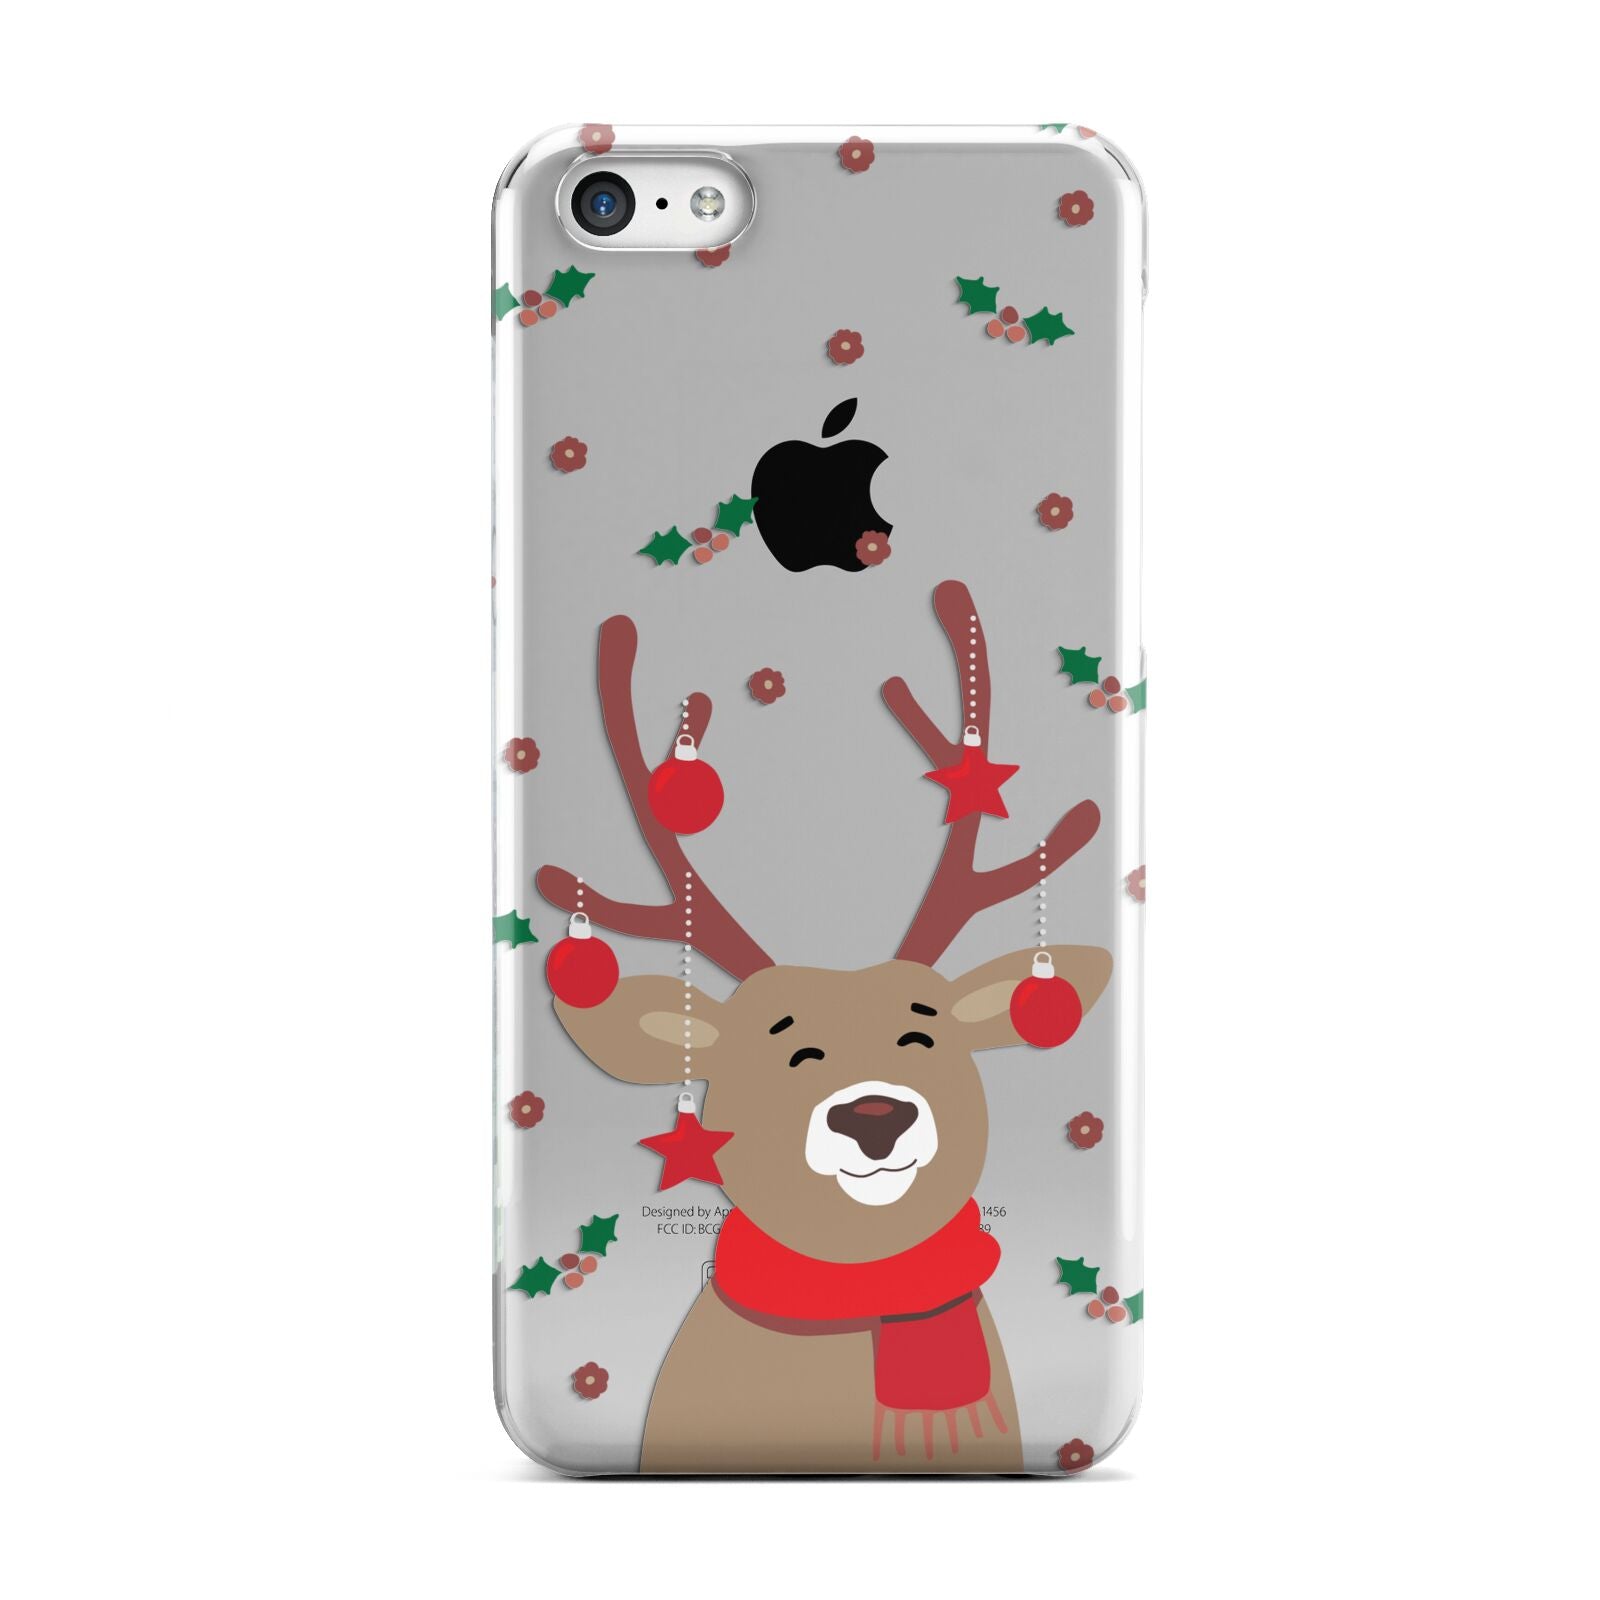 Reindeer Christmas Apple iPhone 5c Case